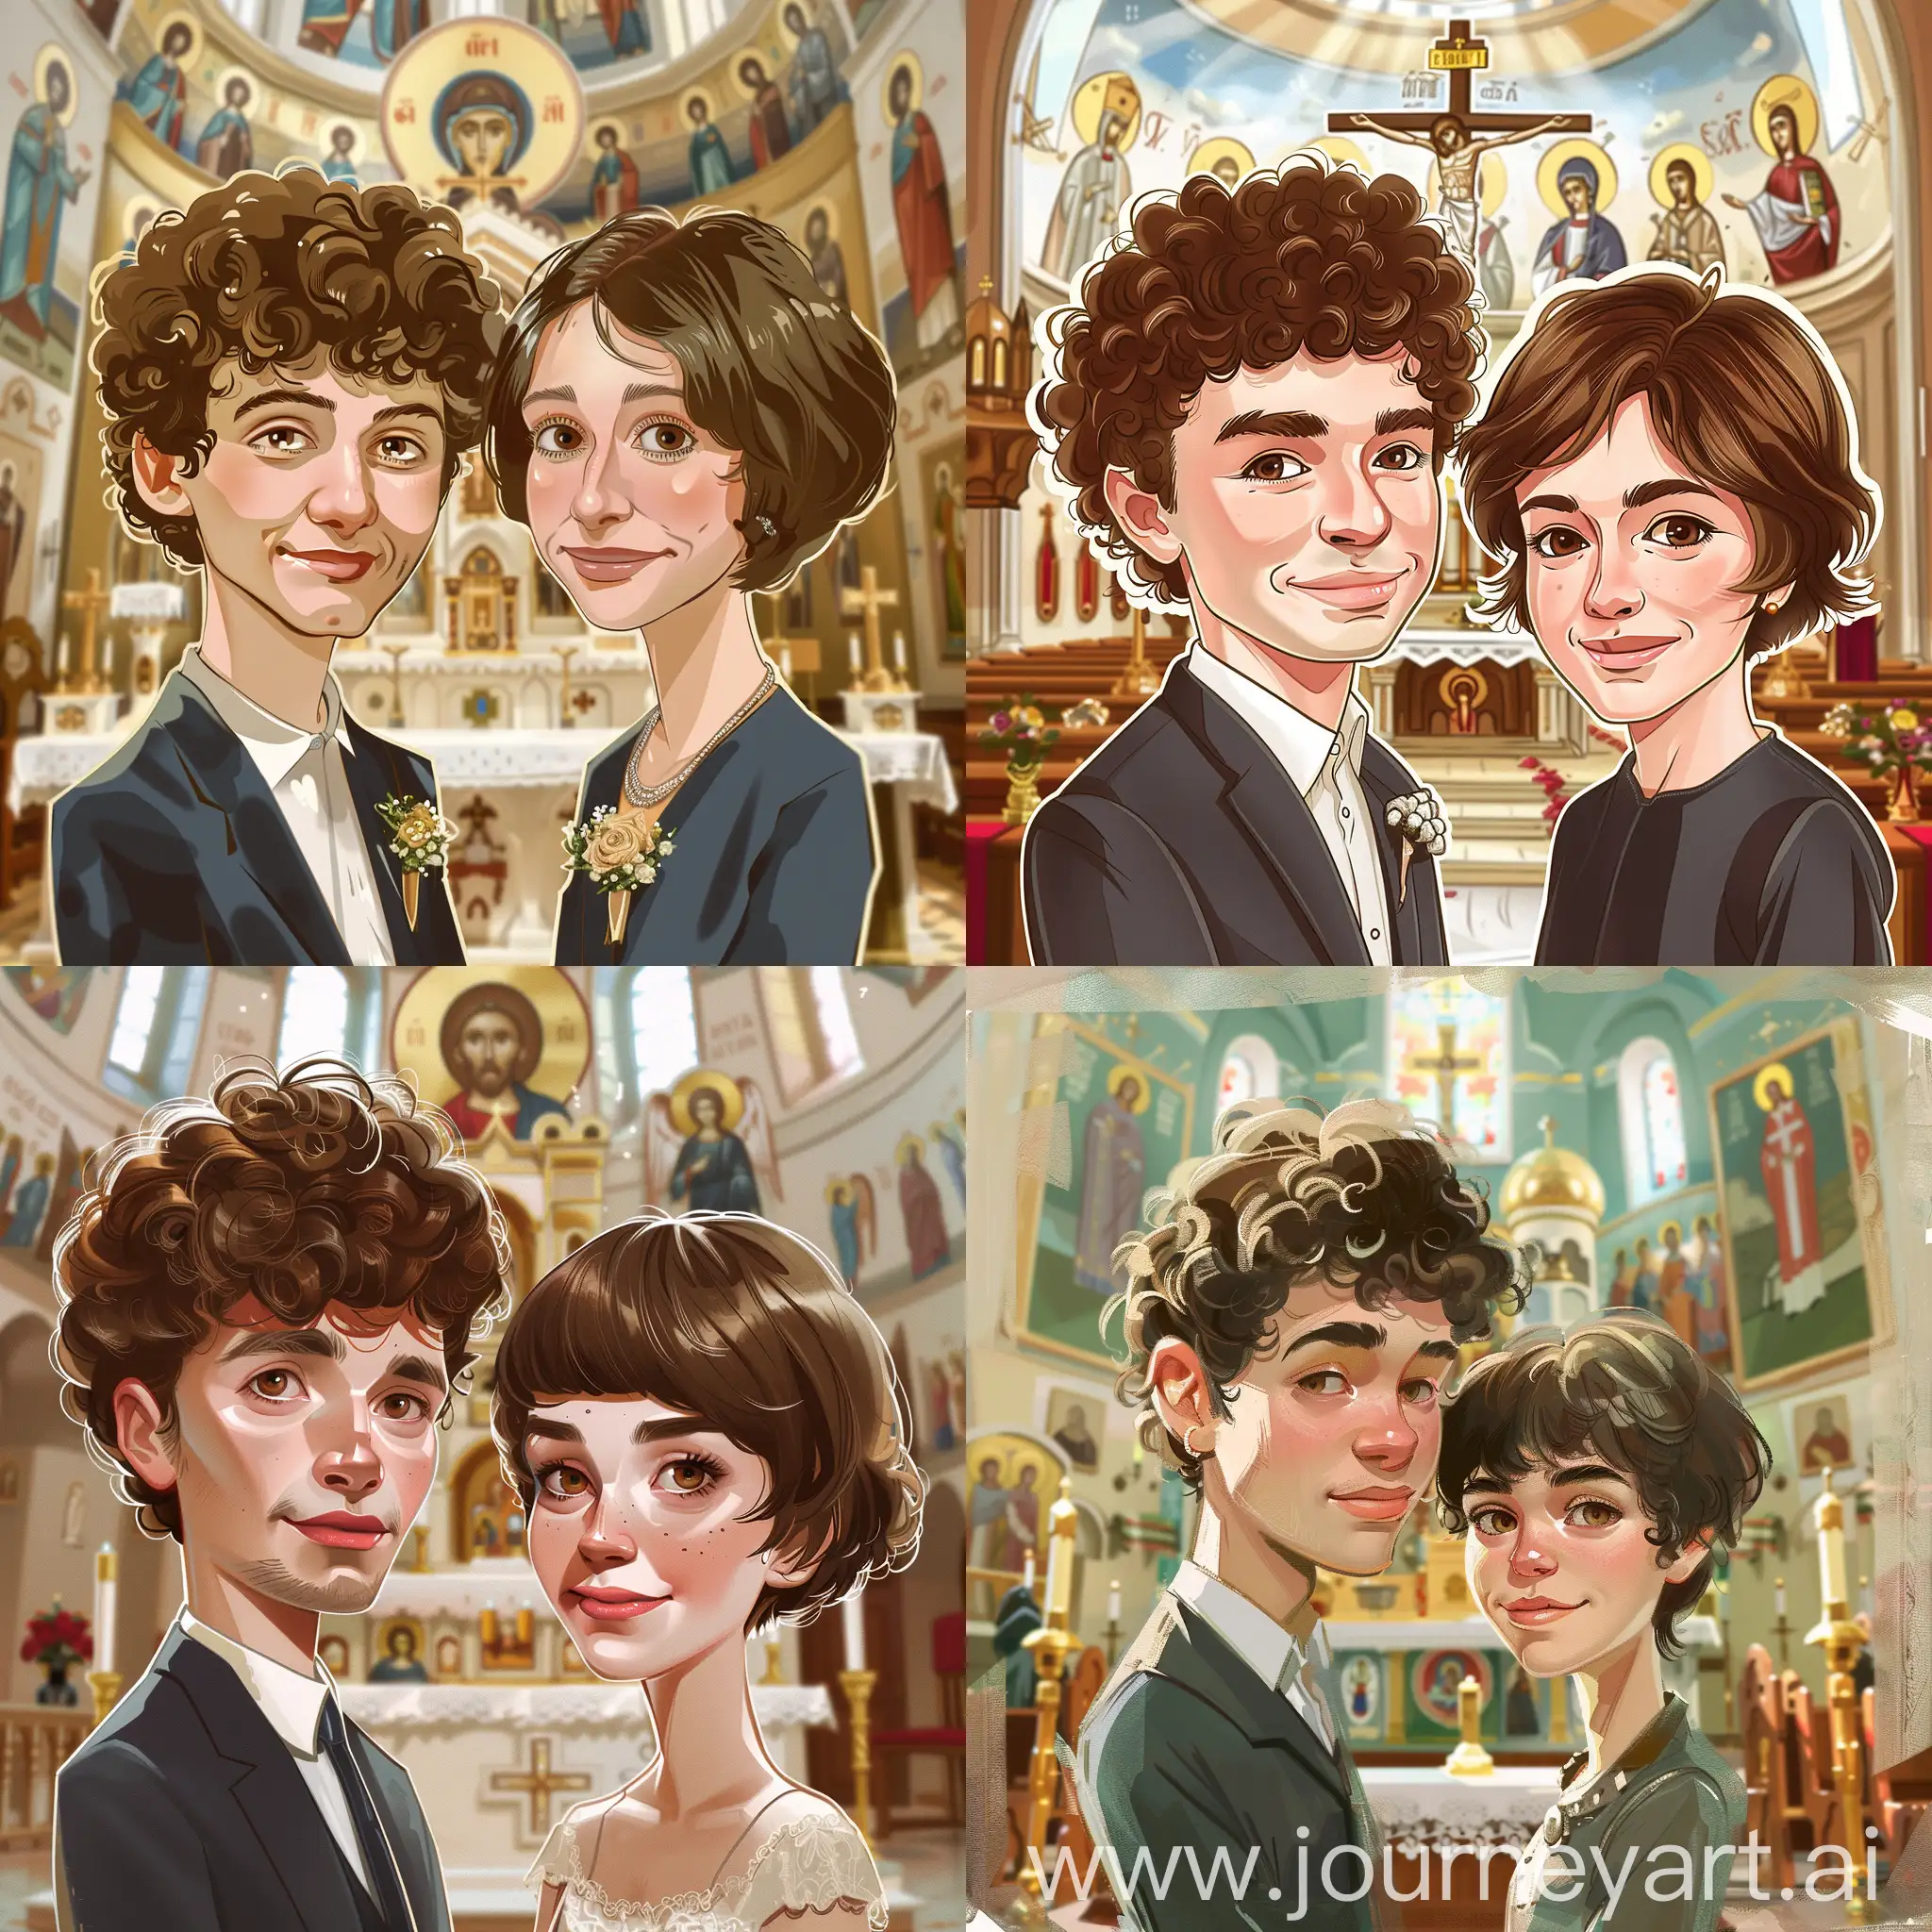 Serbian-Orthodox-Church-Wedding-Joyful-Cartoon-Couple-at-the-Altar